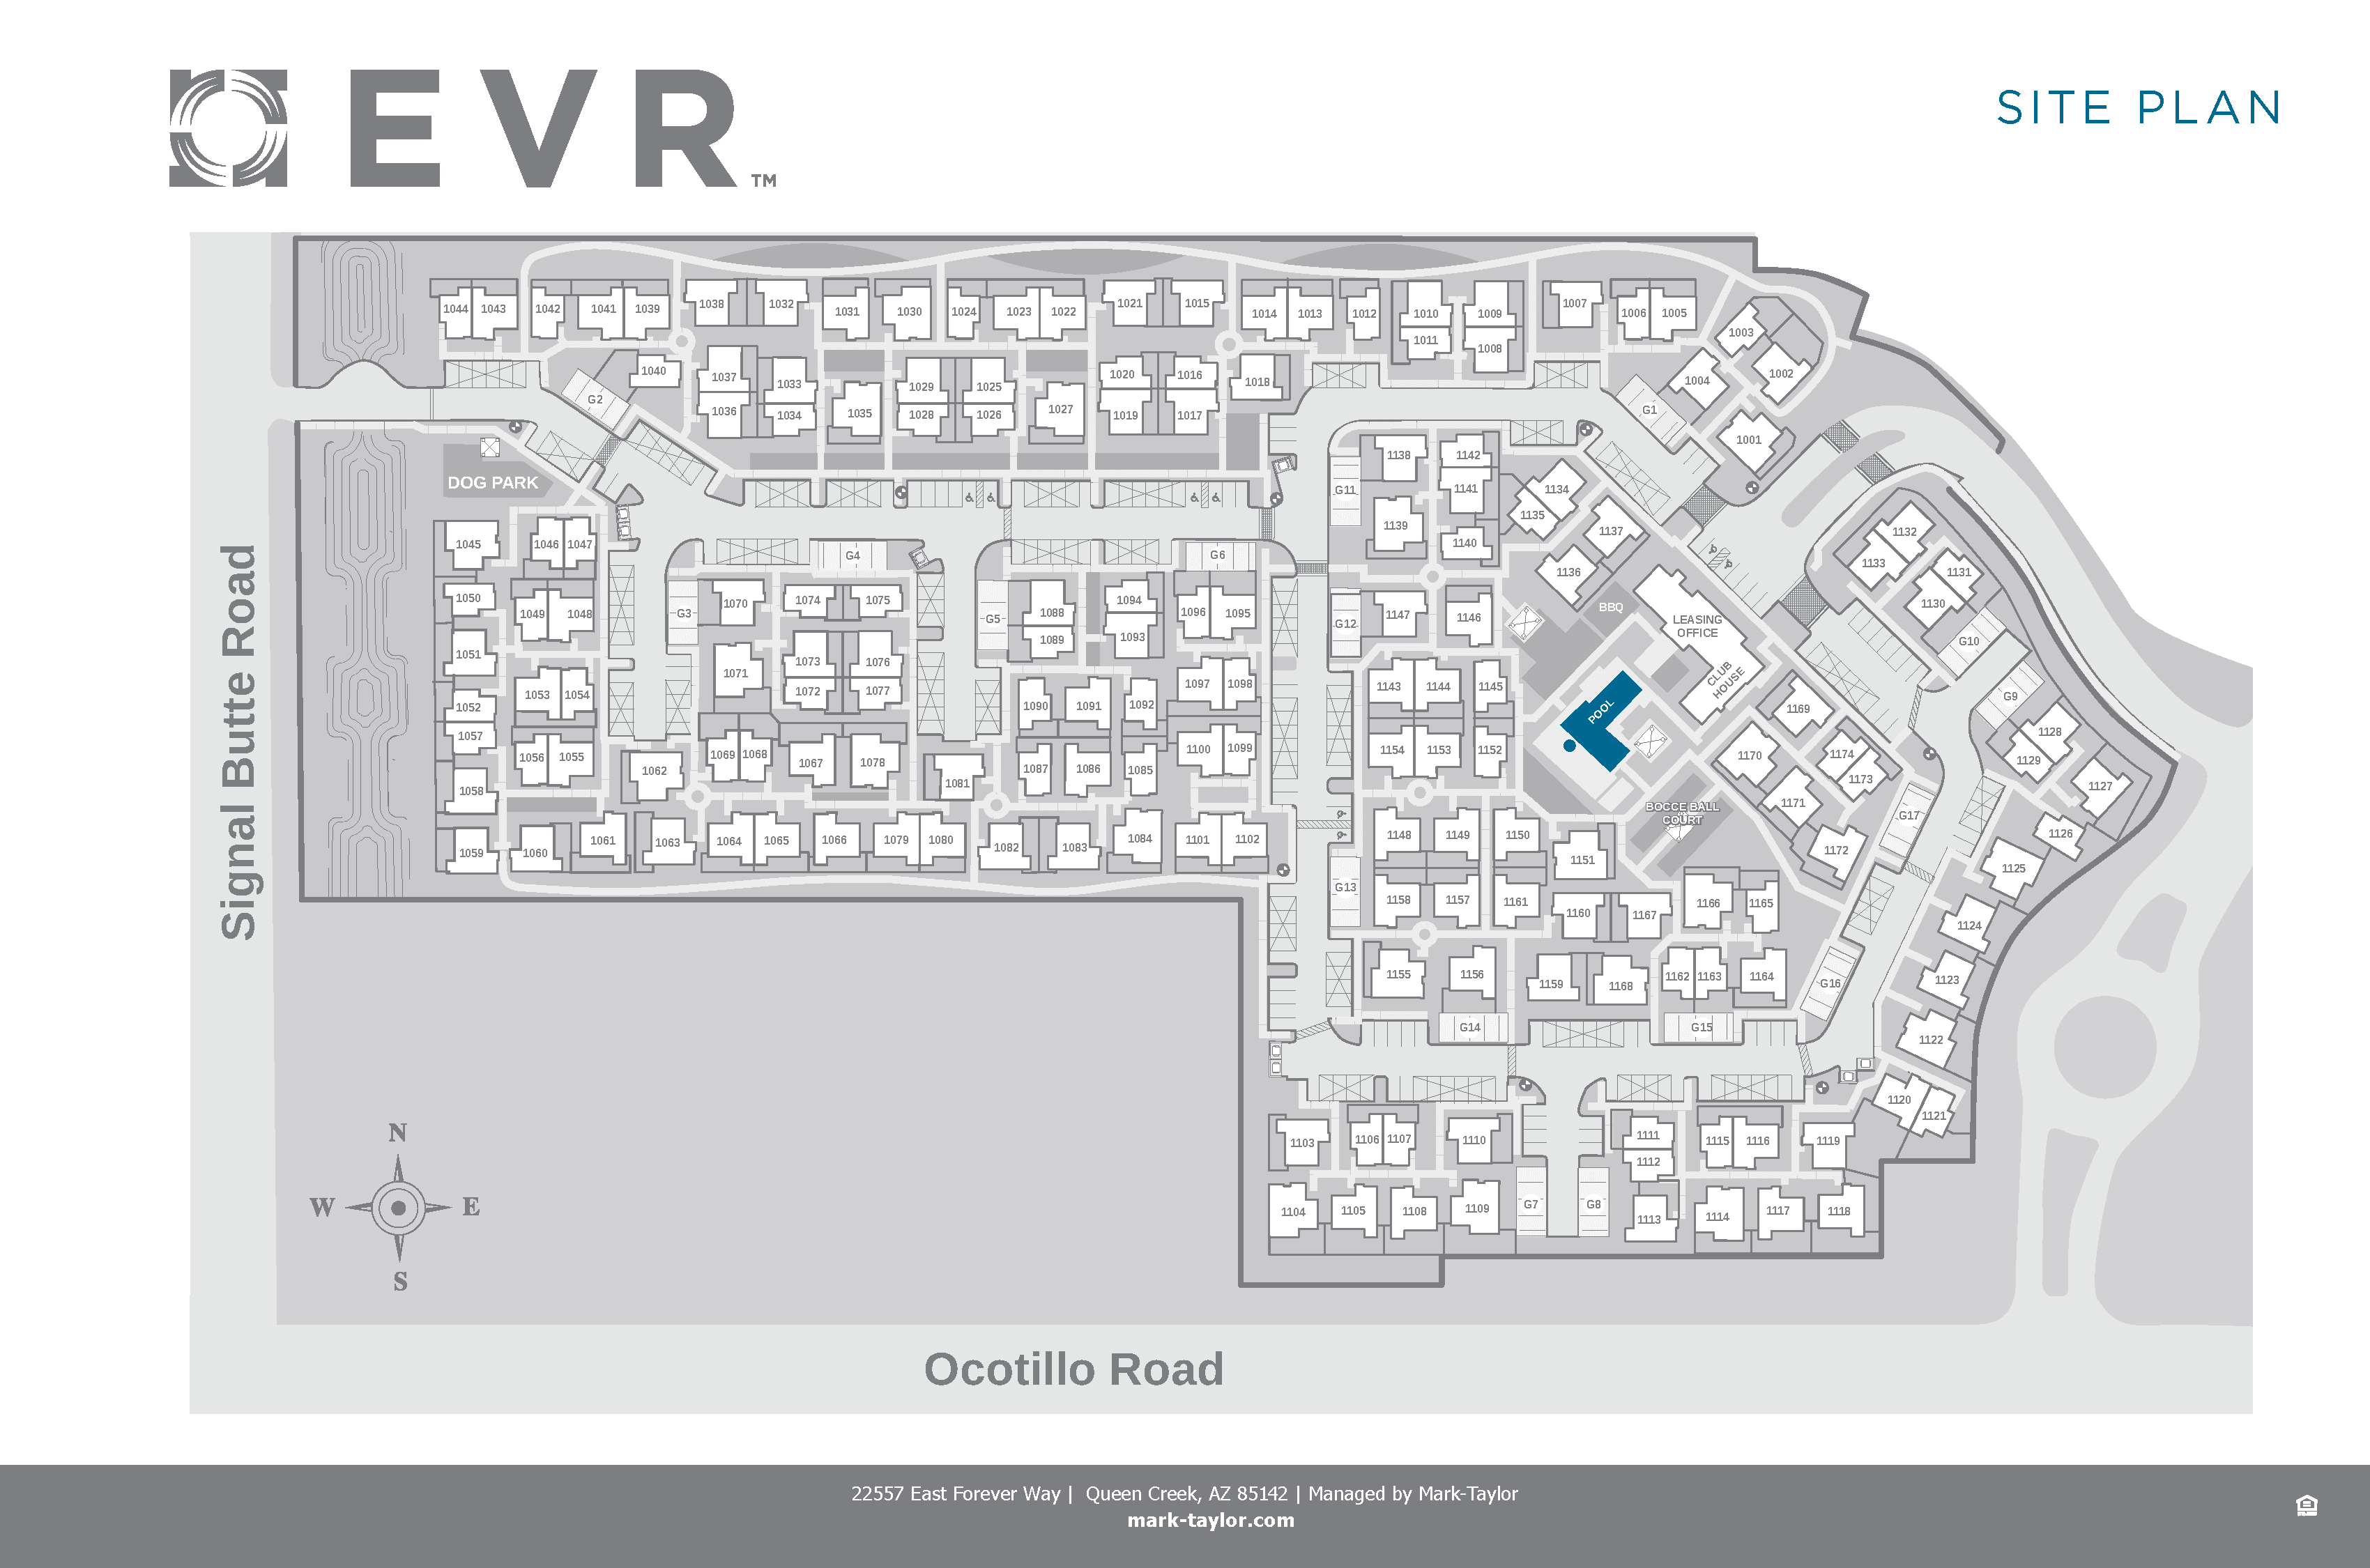 EVR Spur Cross site plan